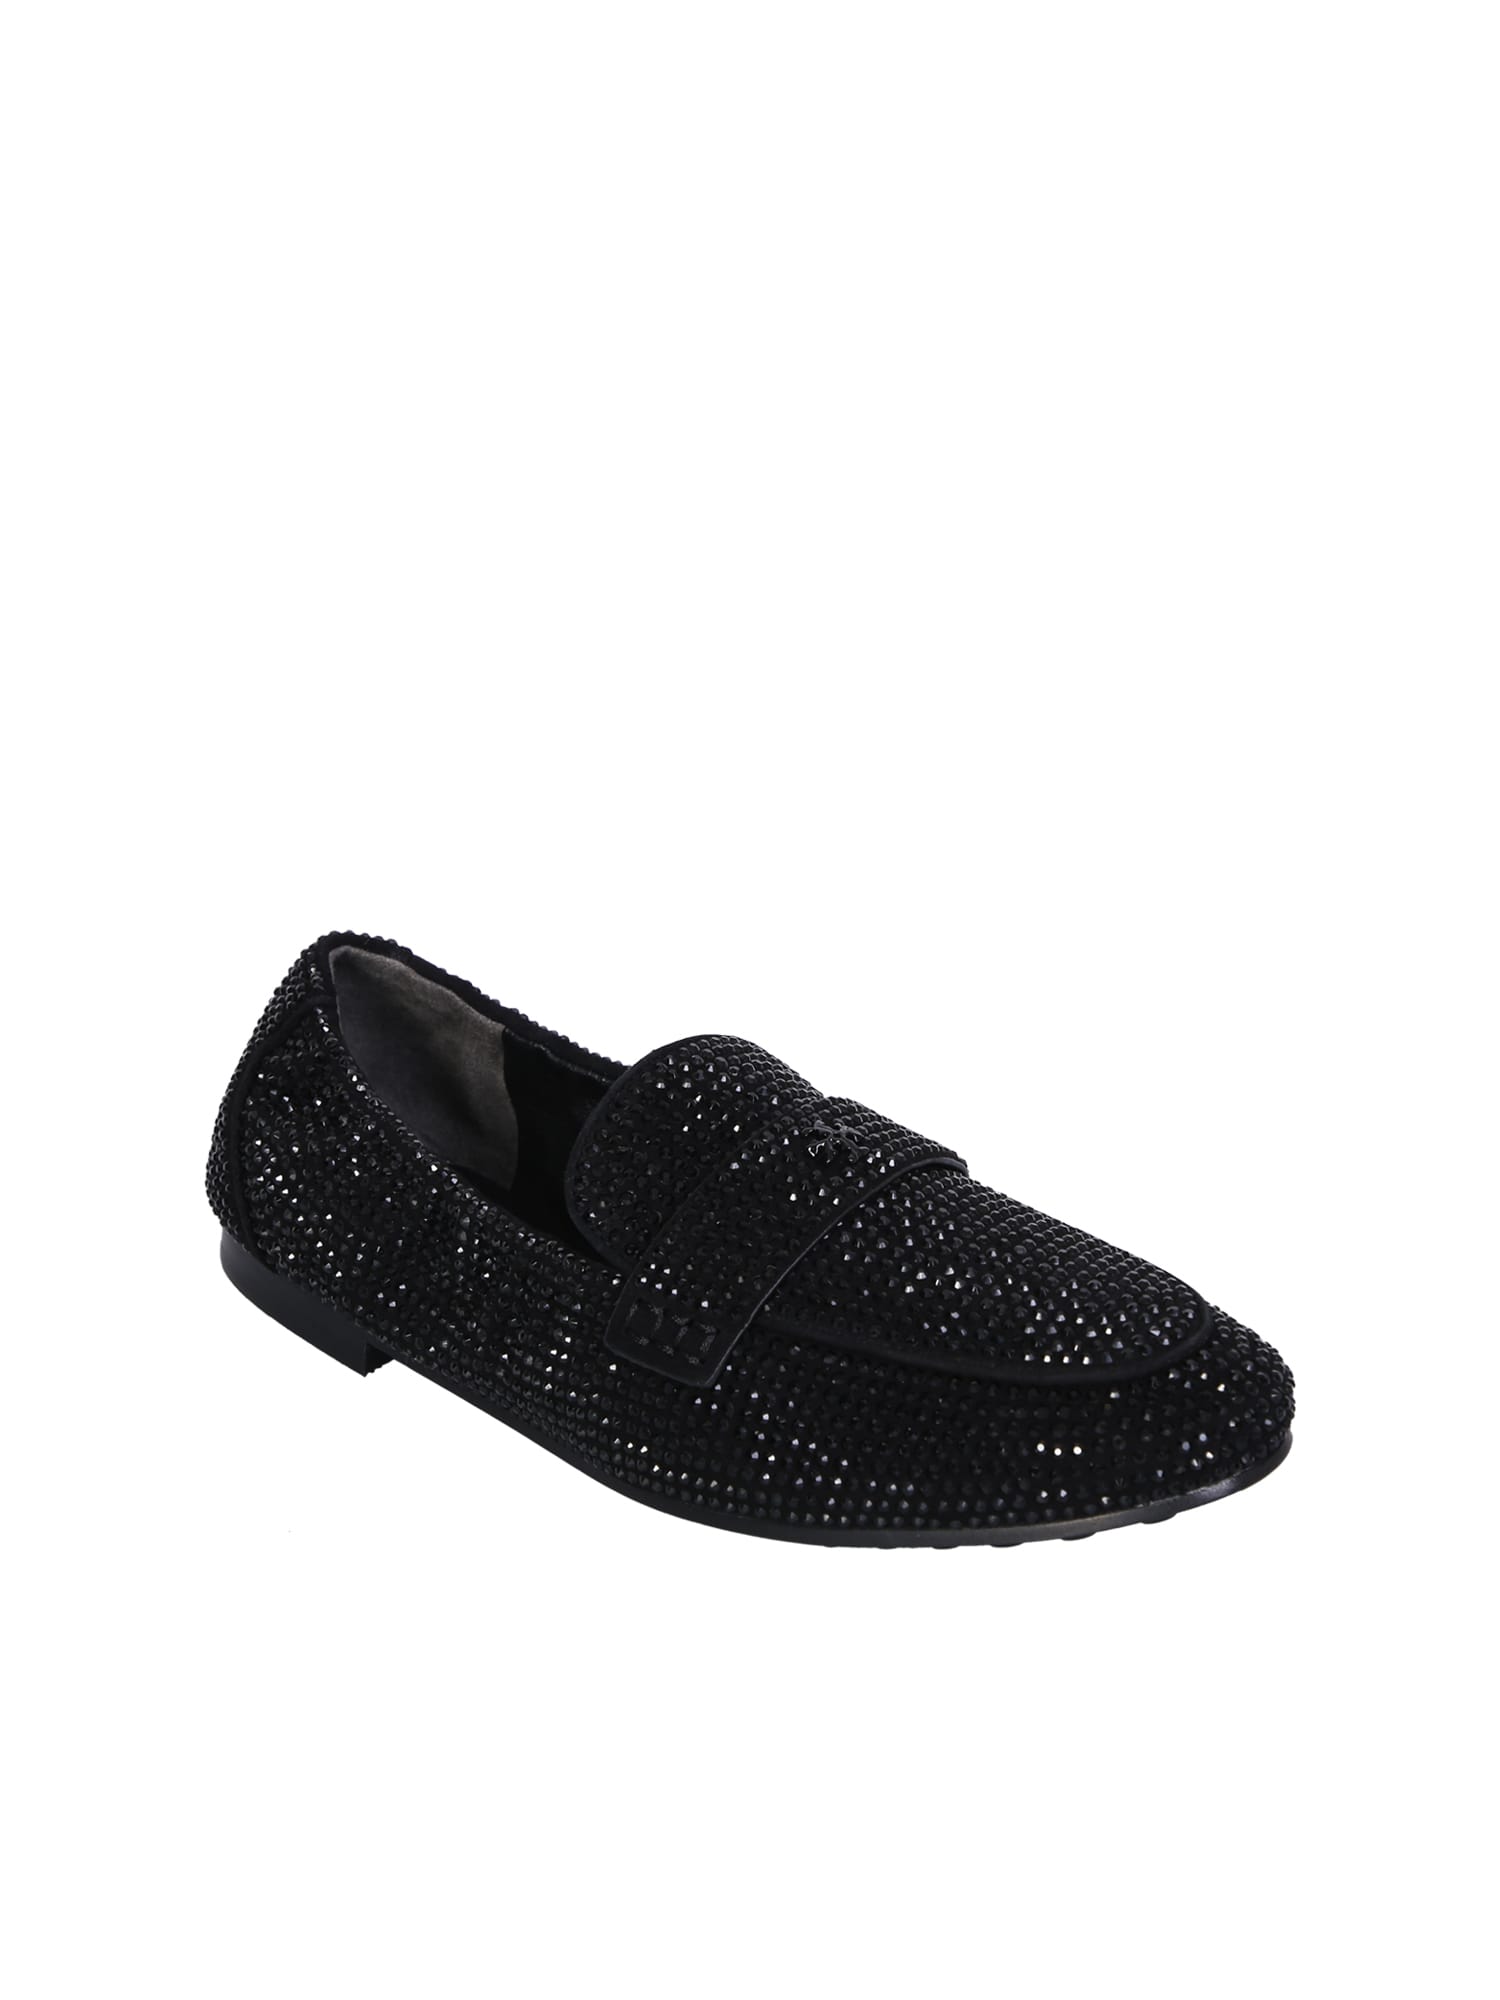 Shop Tory Burch Ballet Black Leather Loafer